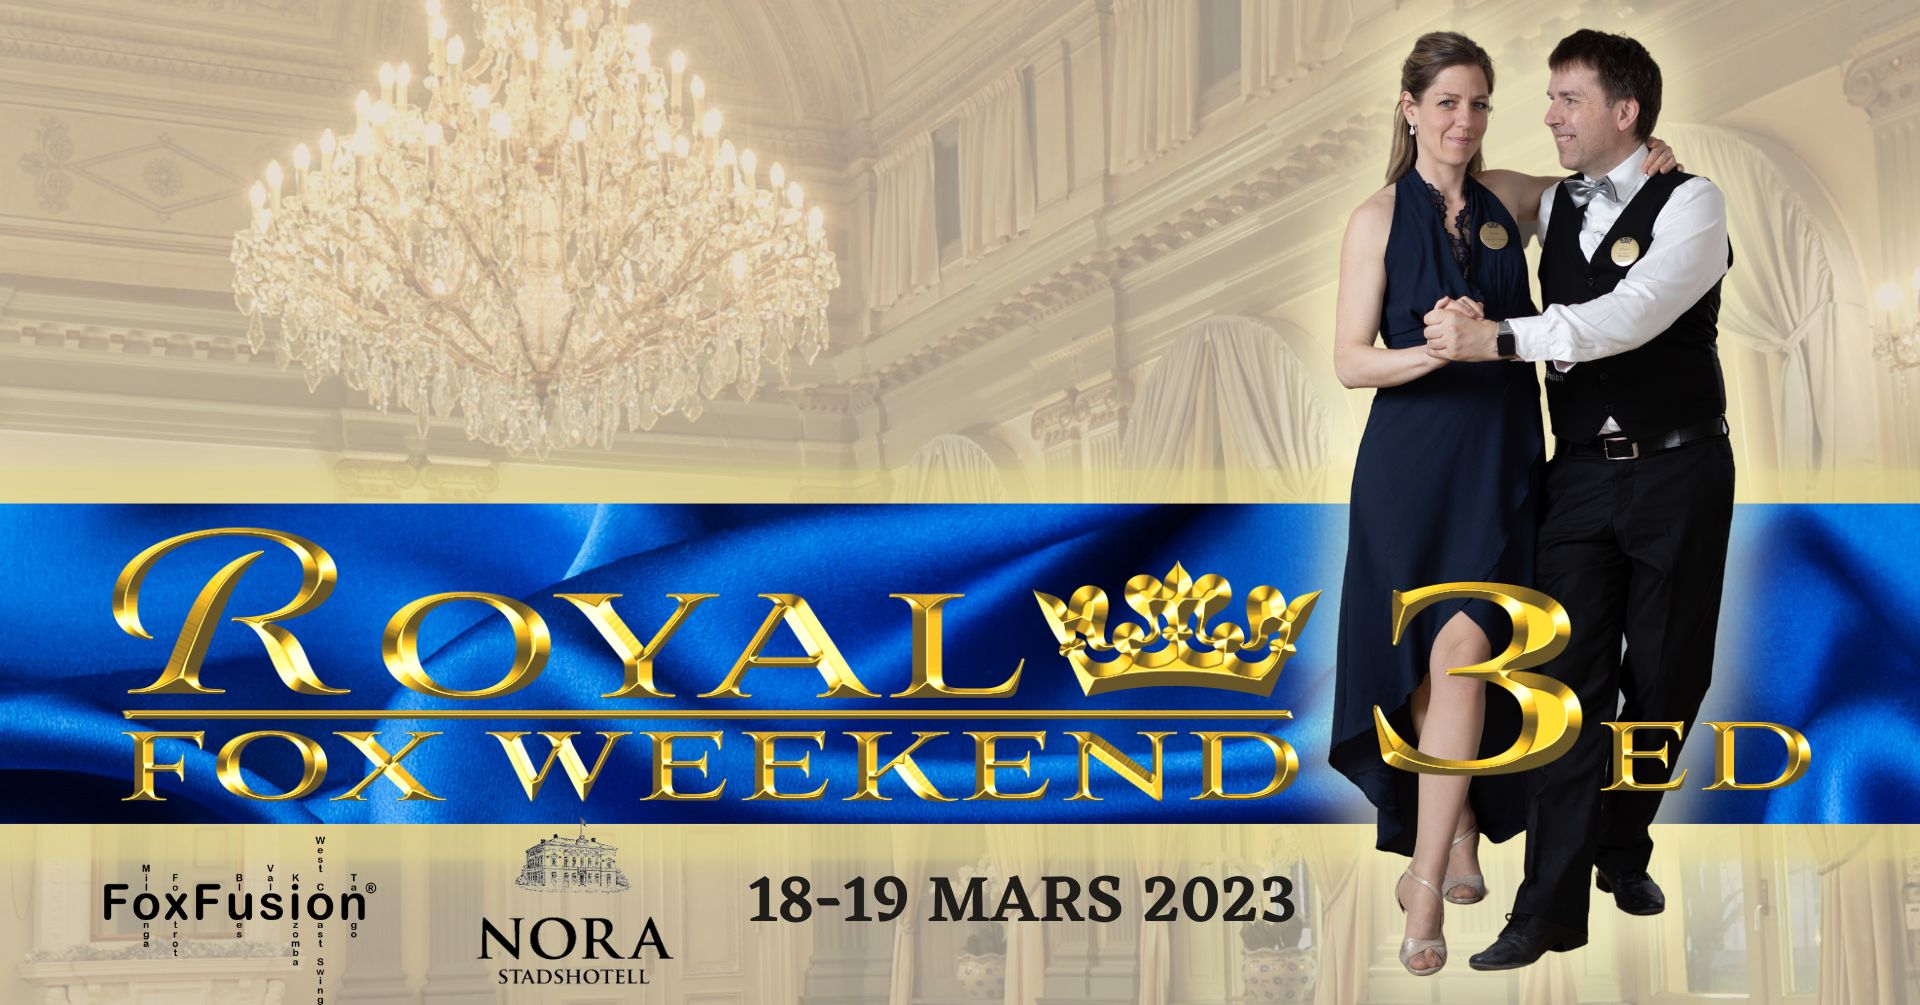 Royal Fox Weekend 3ed